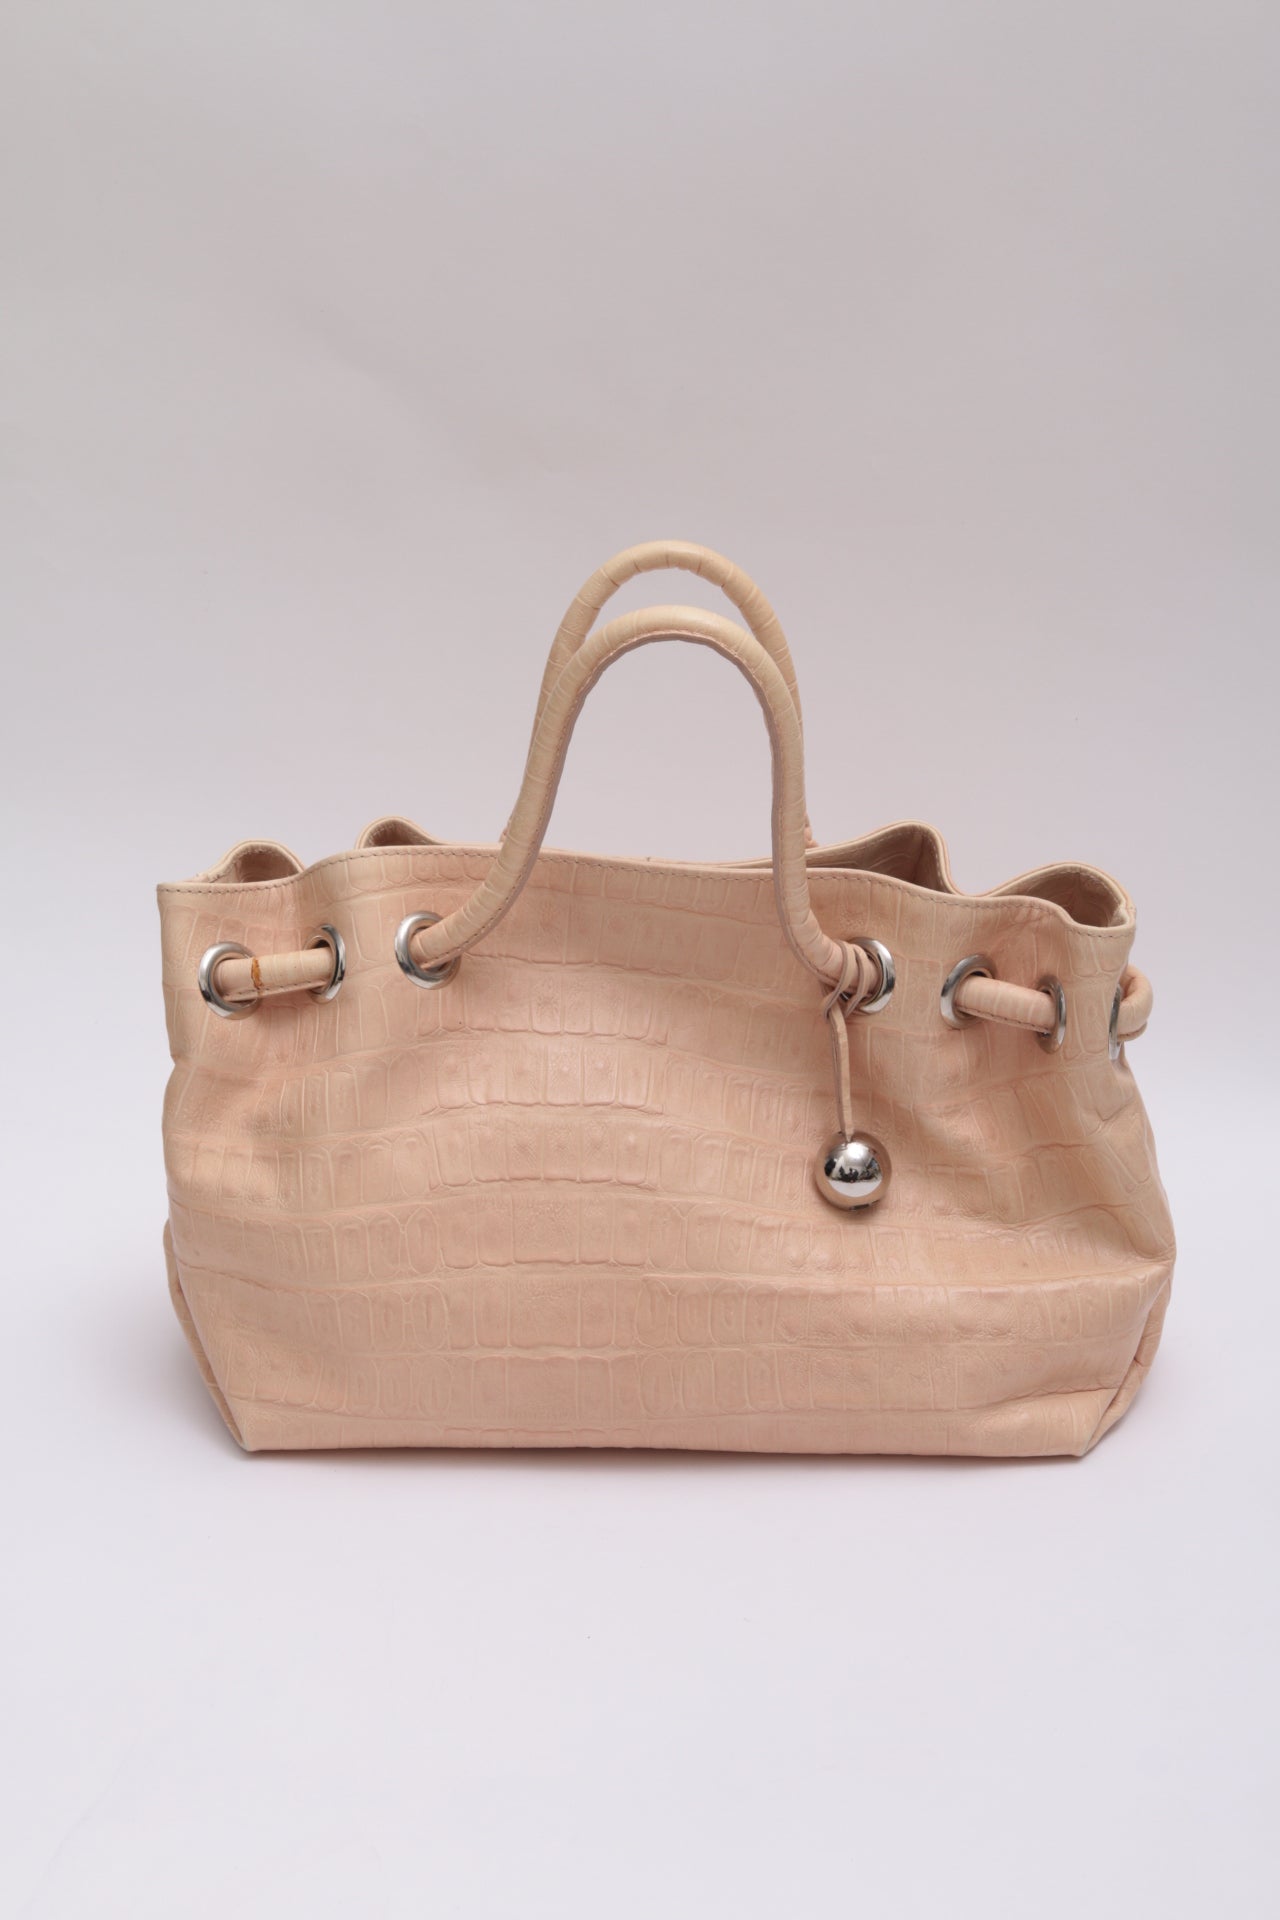 Vintage Furla Leather Bag purse shoulder | Leather evening bags, Purses and  bags, Black leather handbags